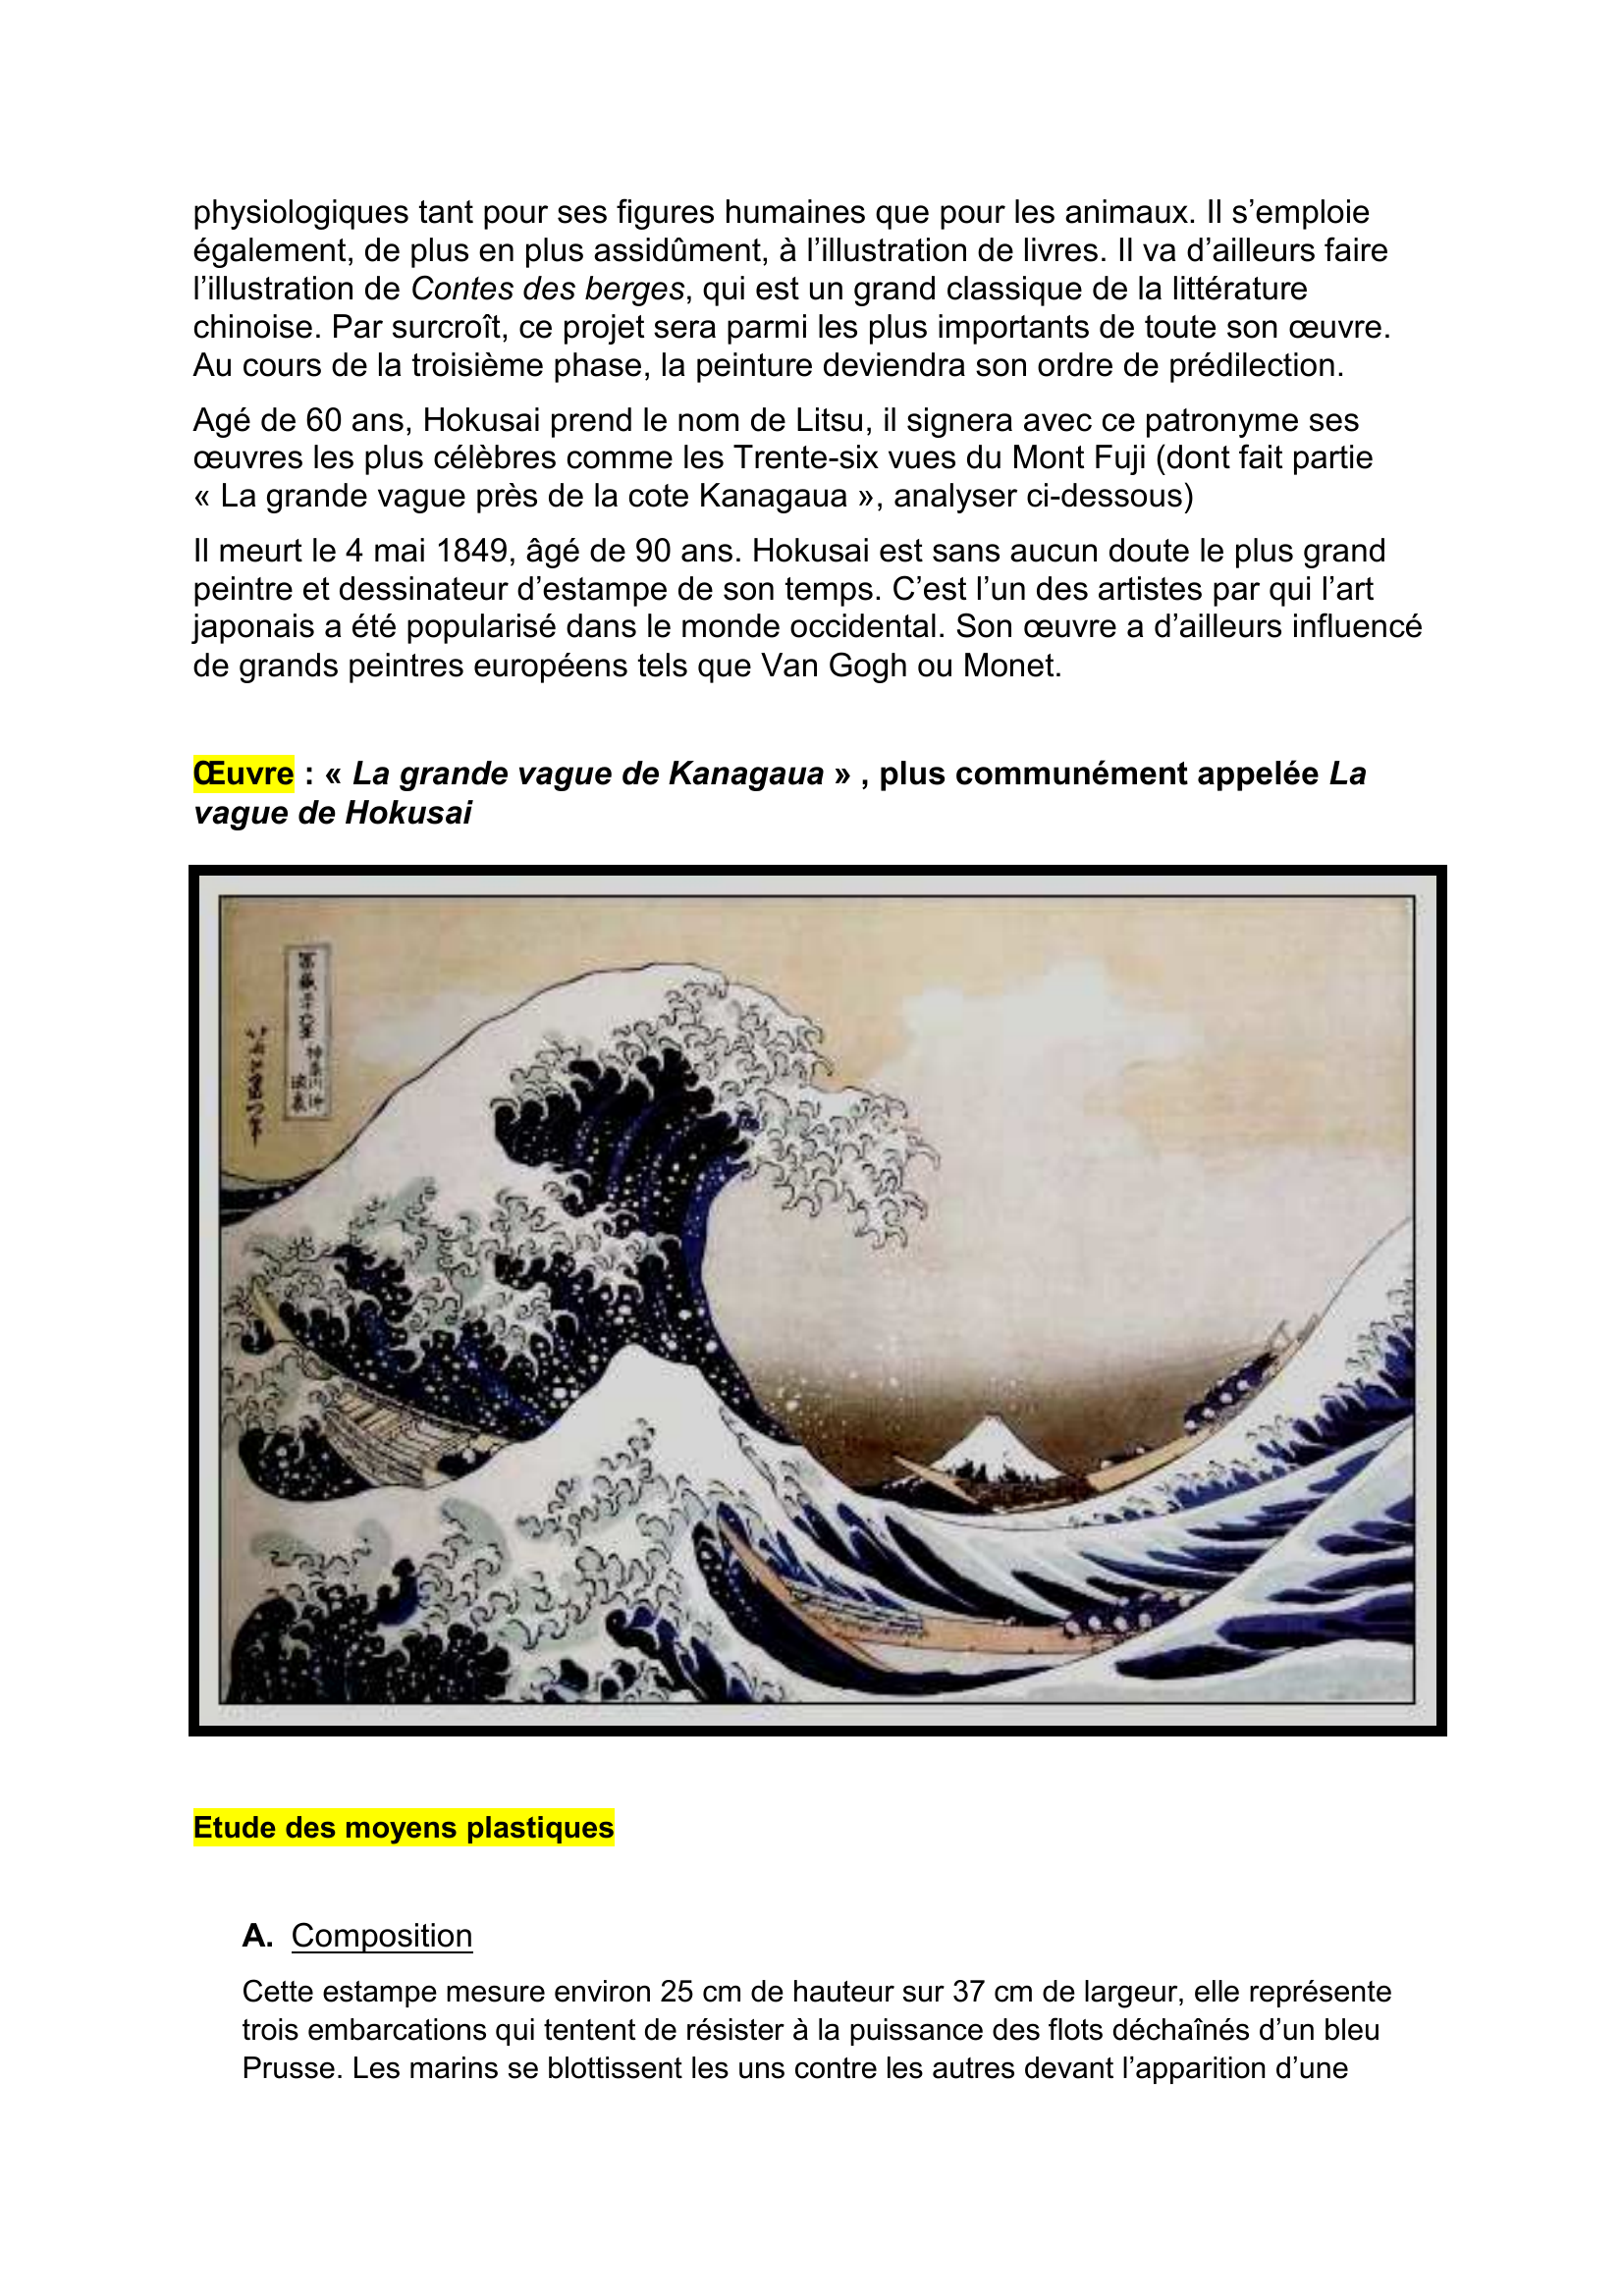 Prévisualisation du document « La Grande vague de Kanagagua »  De  Katsushika Hokusai